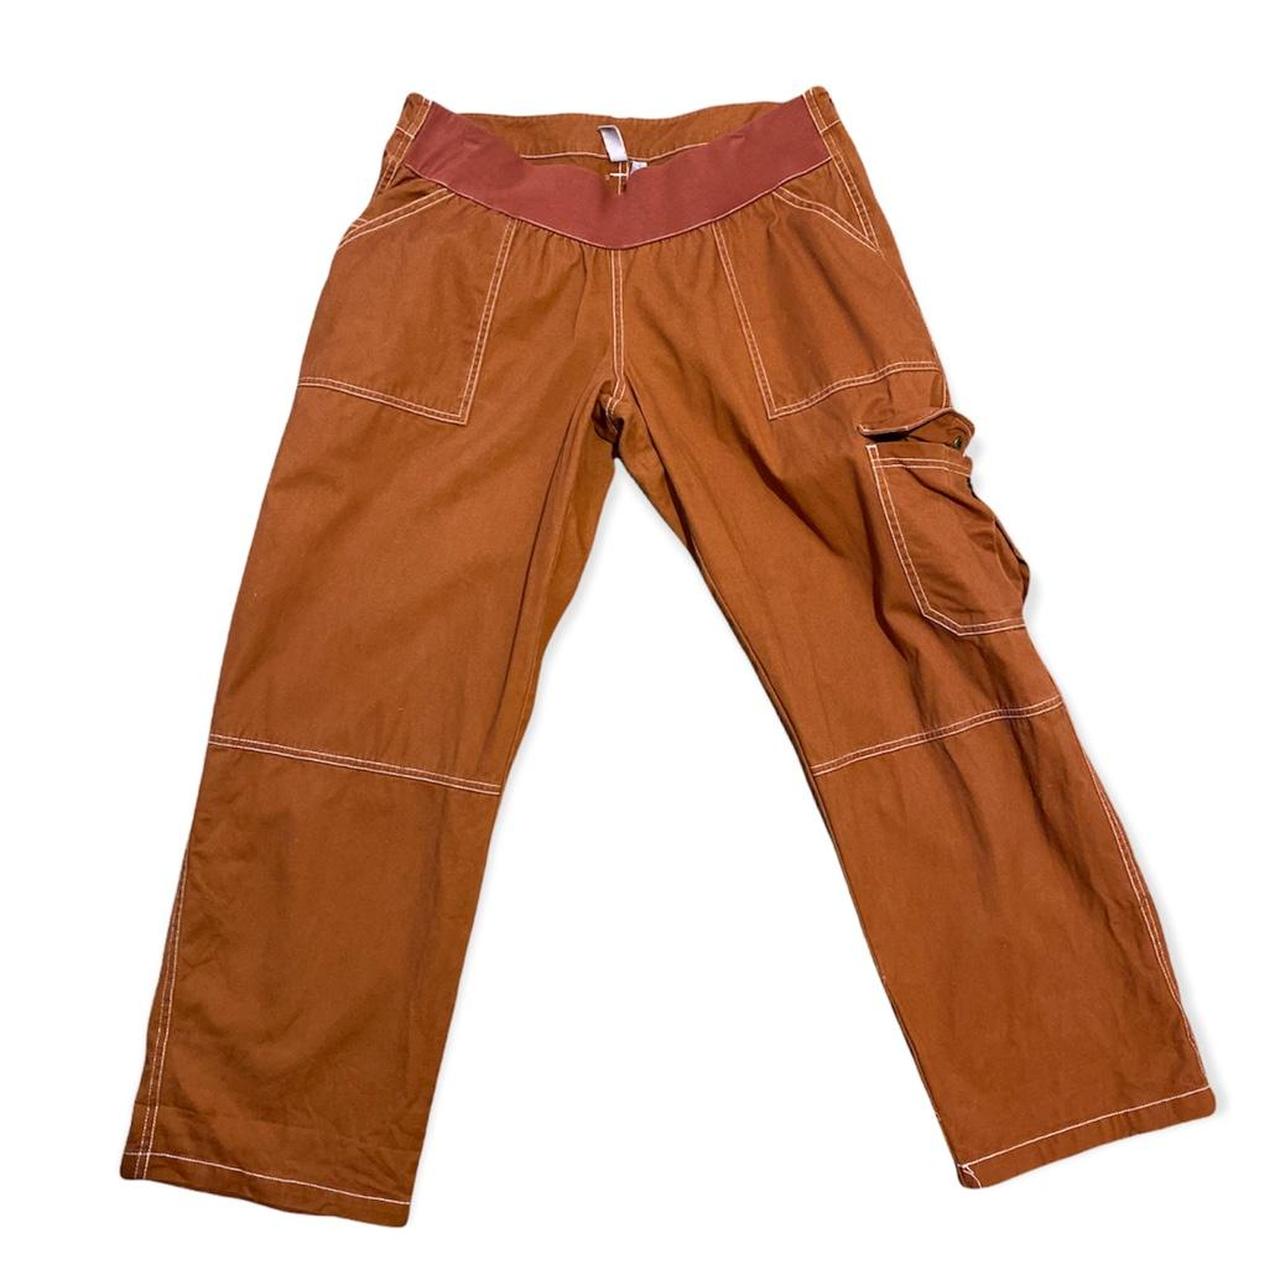 Women’s ASOS Carpenter/ Cargo Pants with elastic... - Depop